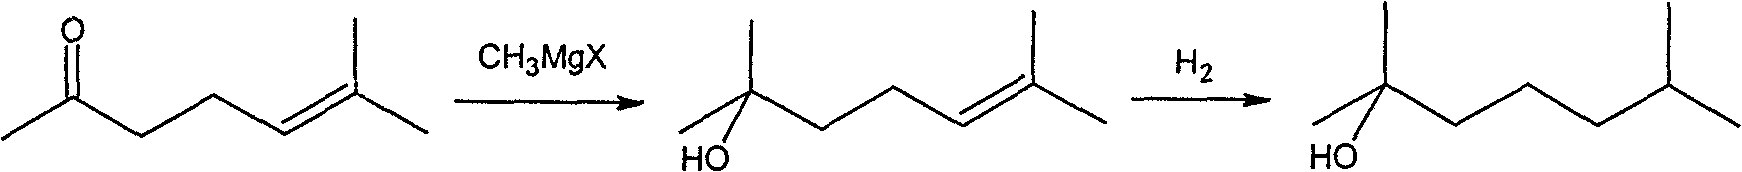 Method for preparing 2,6-dimethyl-2-heptanol